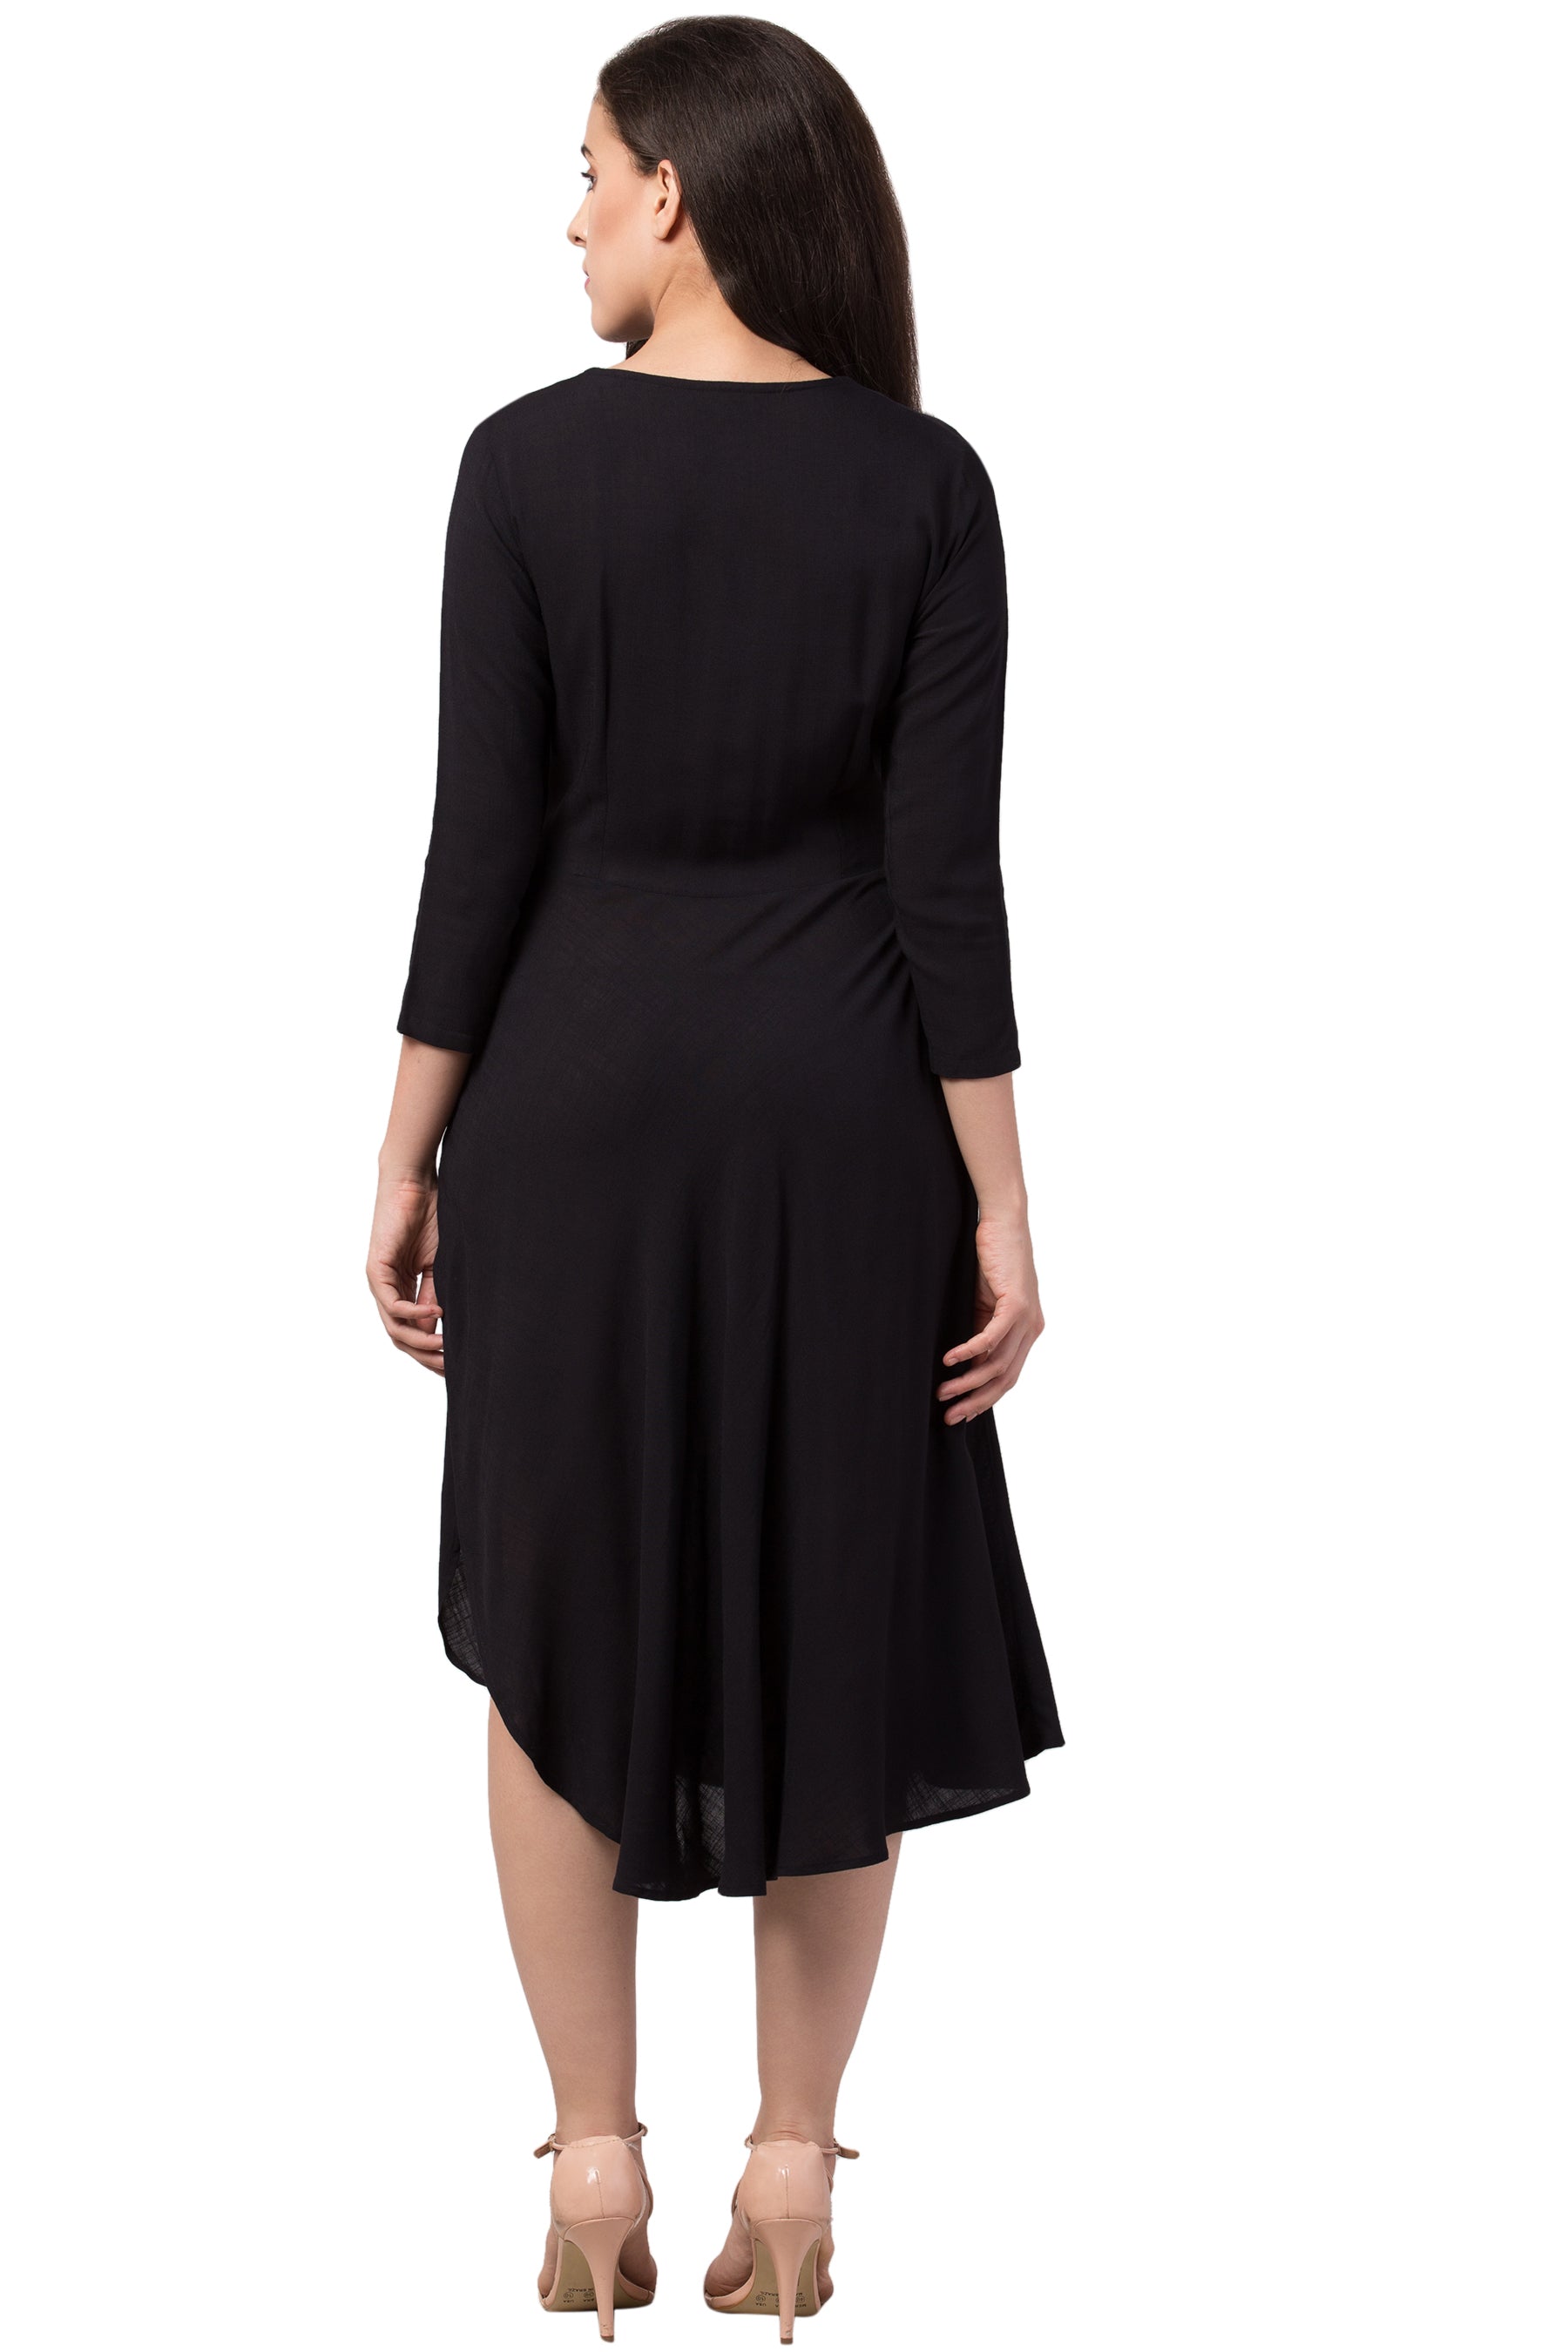 Half shirt cowl dress : Black - wishdrobe